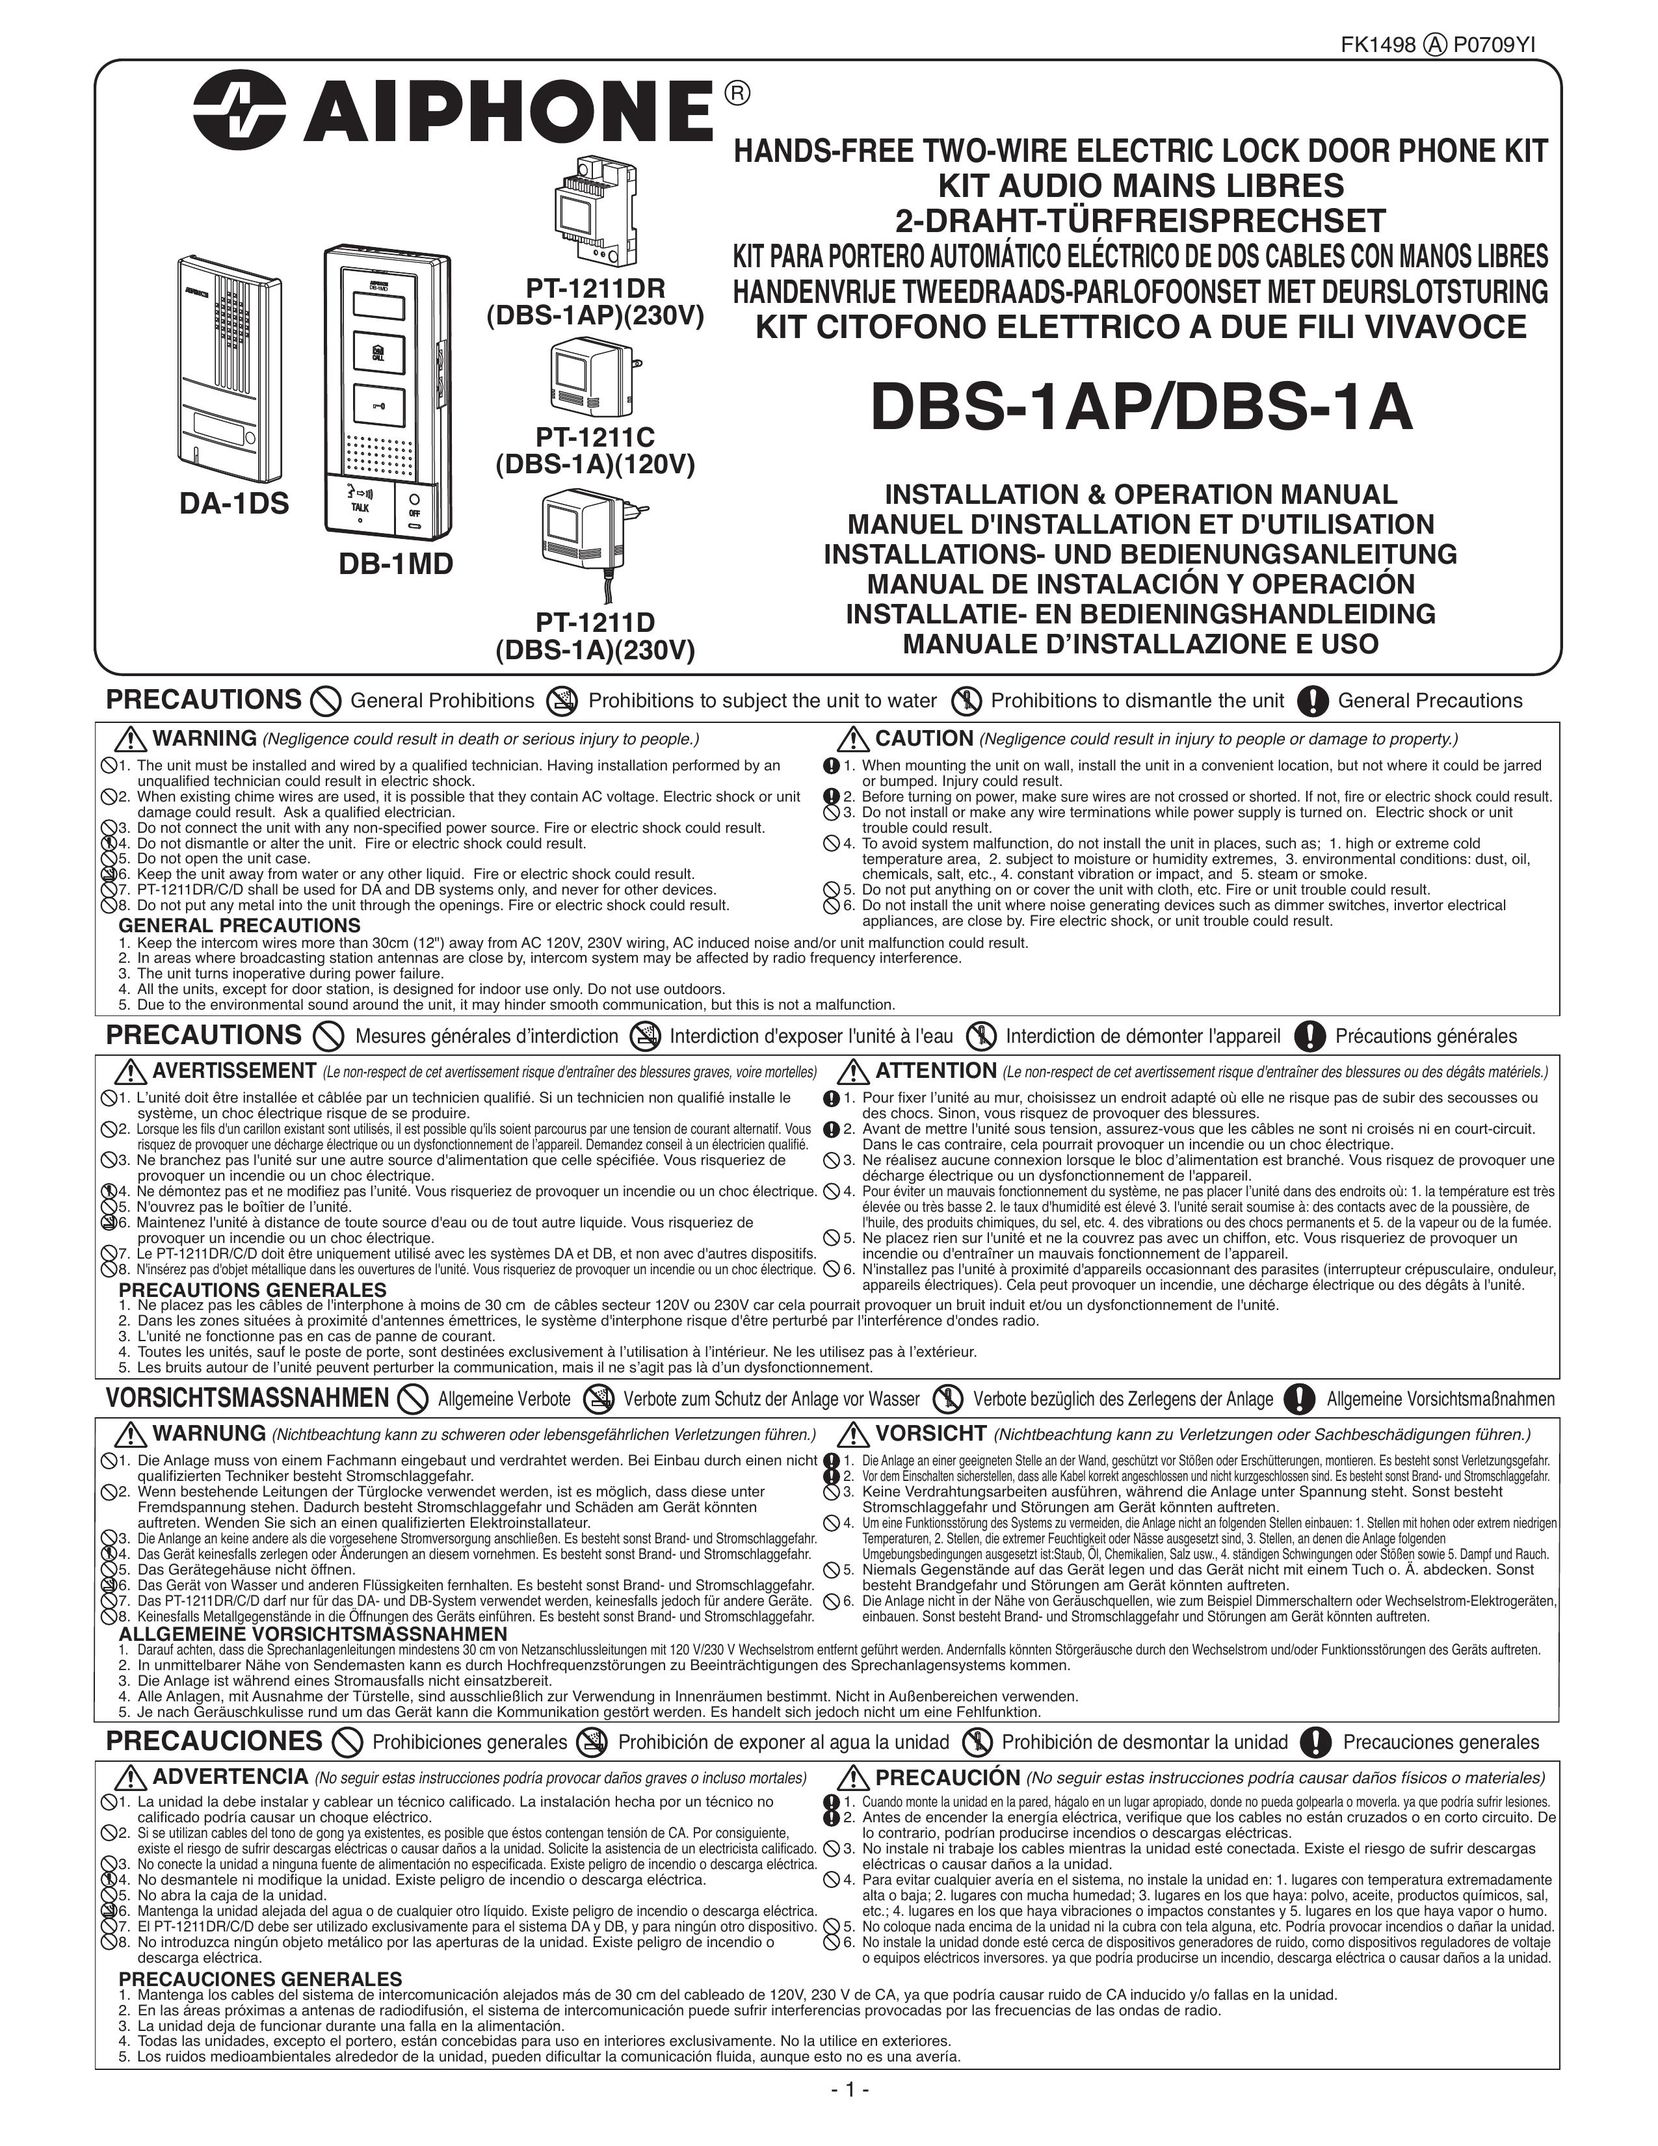 Aiphone DBS-1A Door User Manual